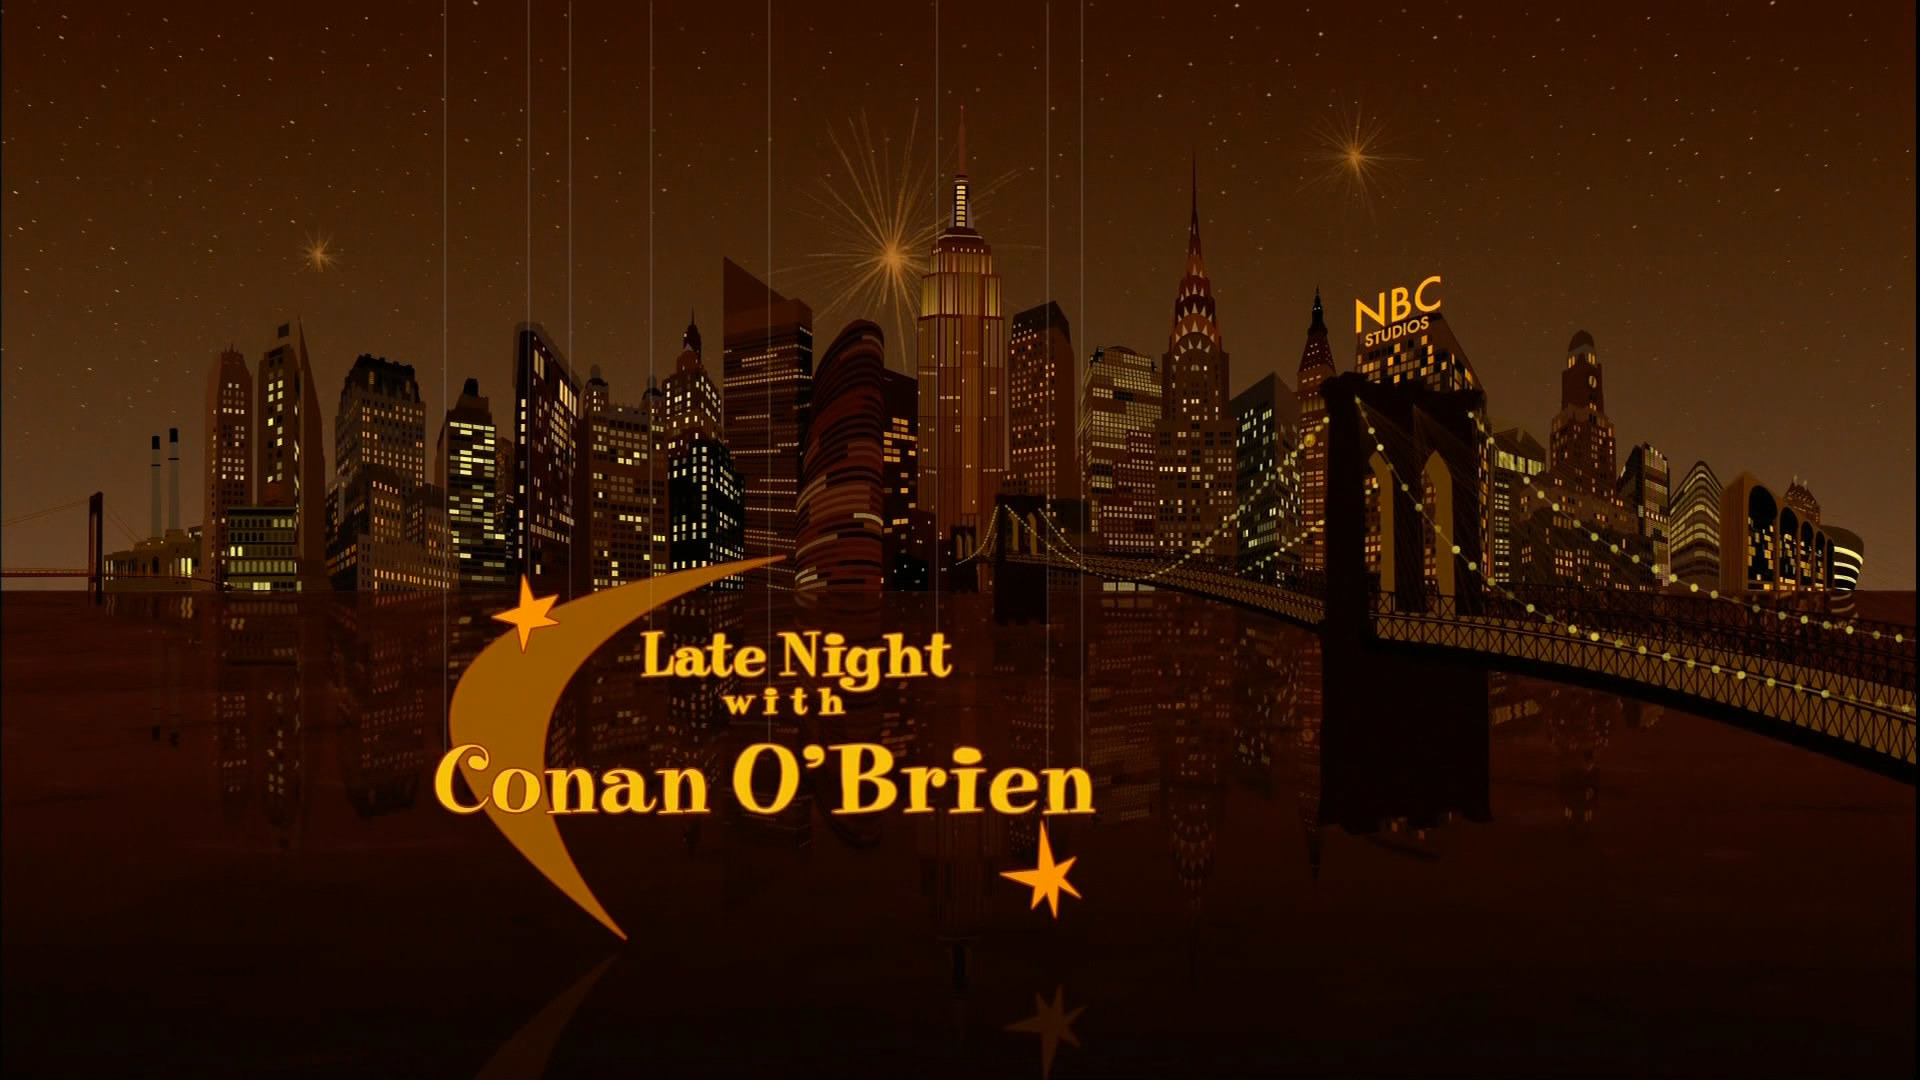 Show Late Night with Conan O'Brien